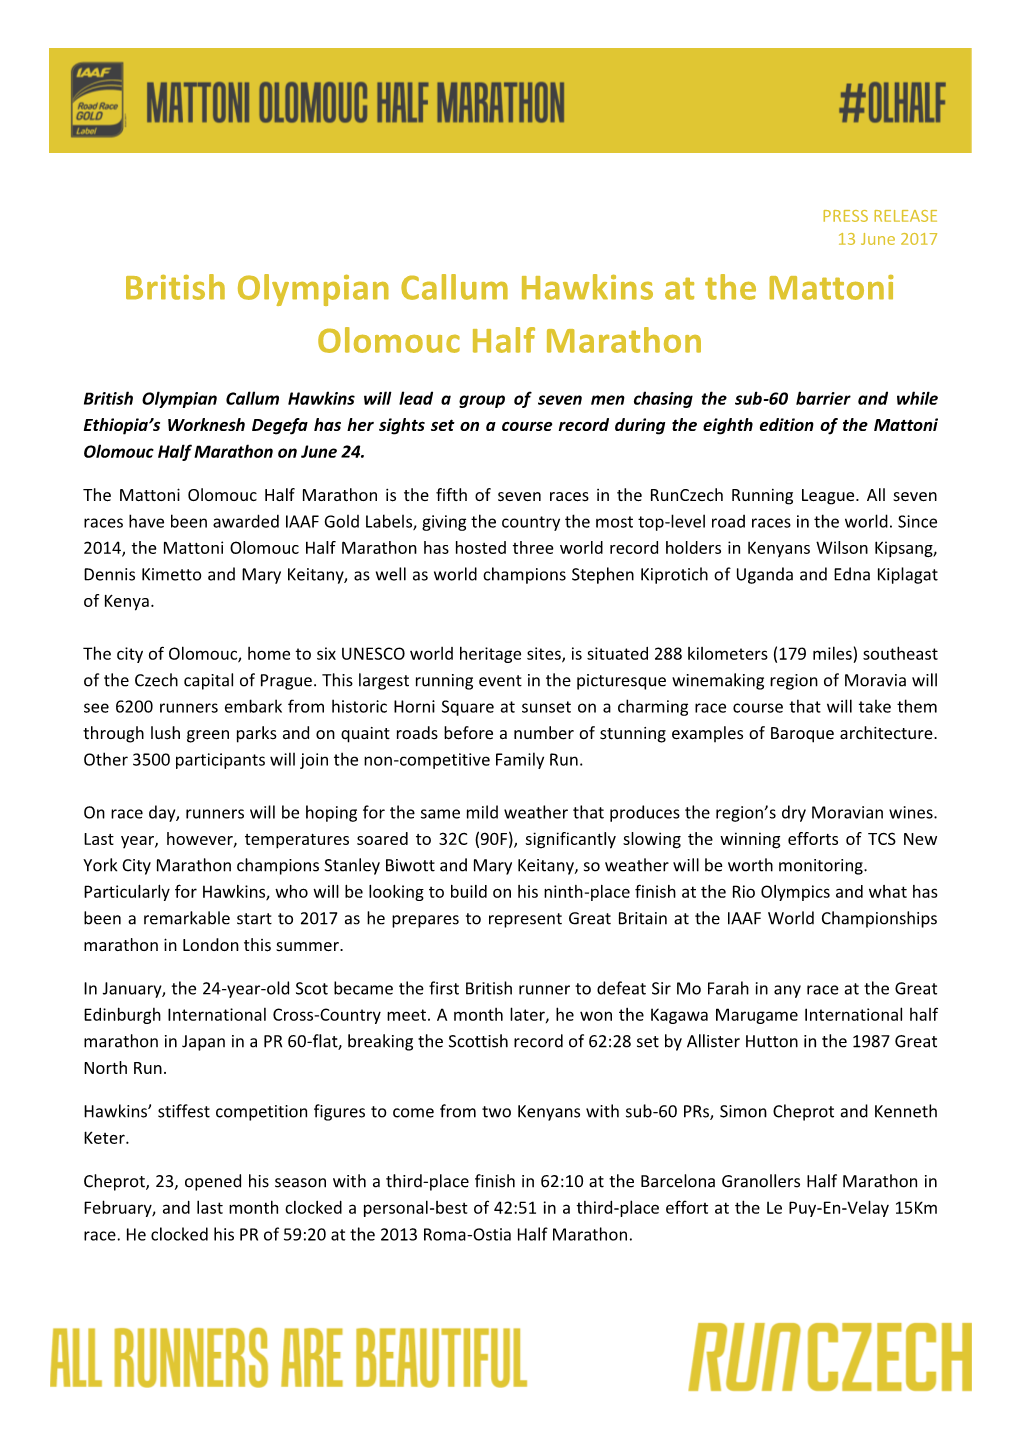 British Olympian Callum Hawkins at the Mattoni Olomouc Half Marathon